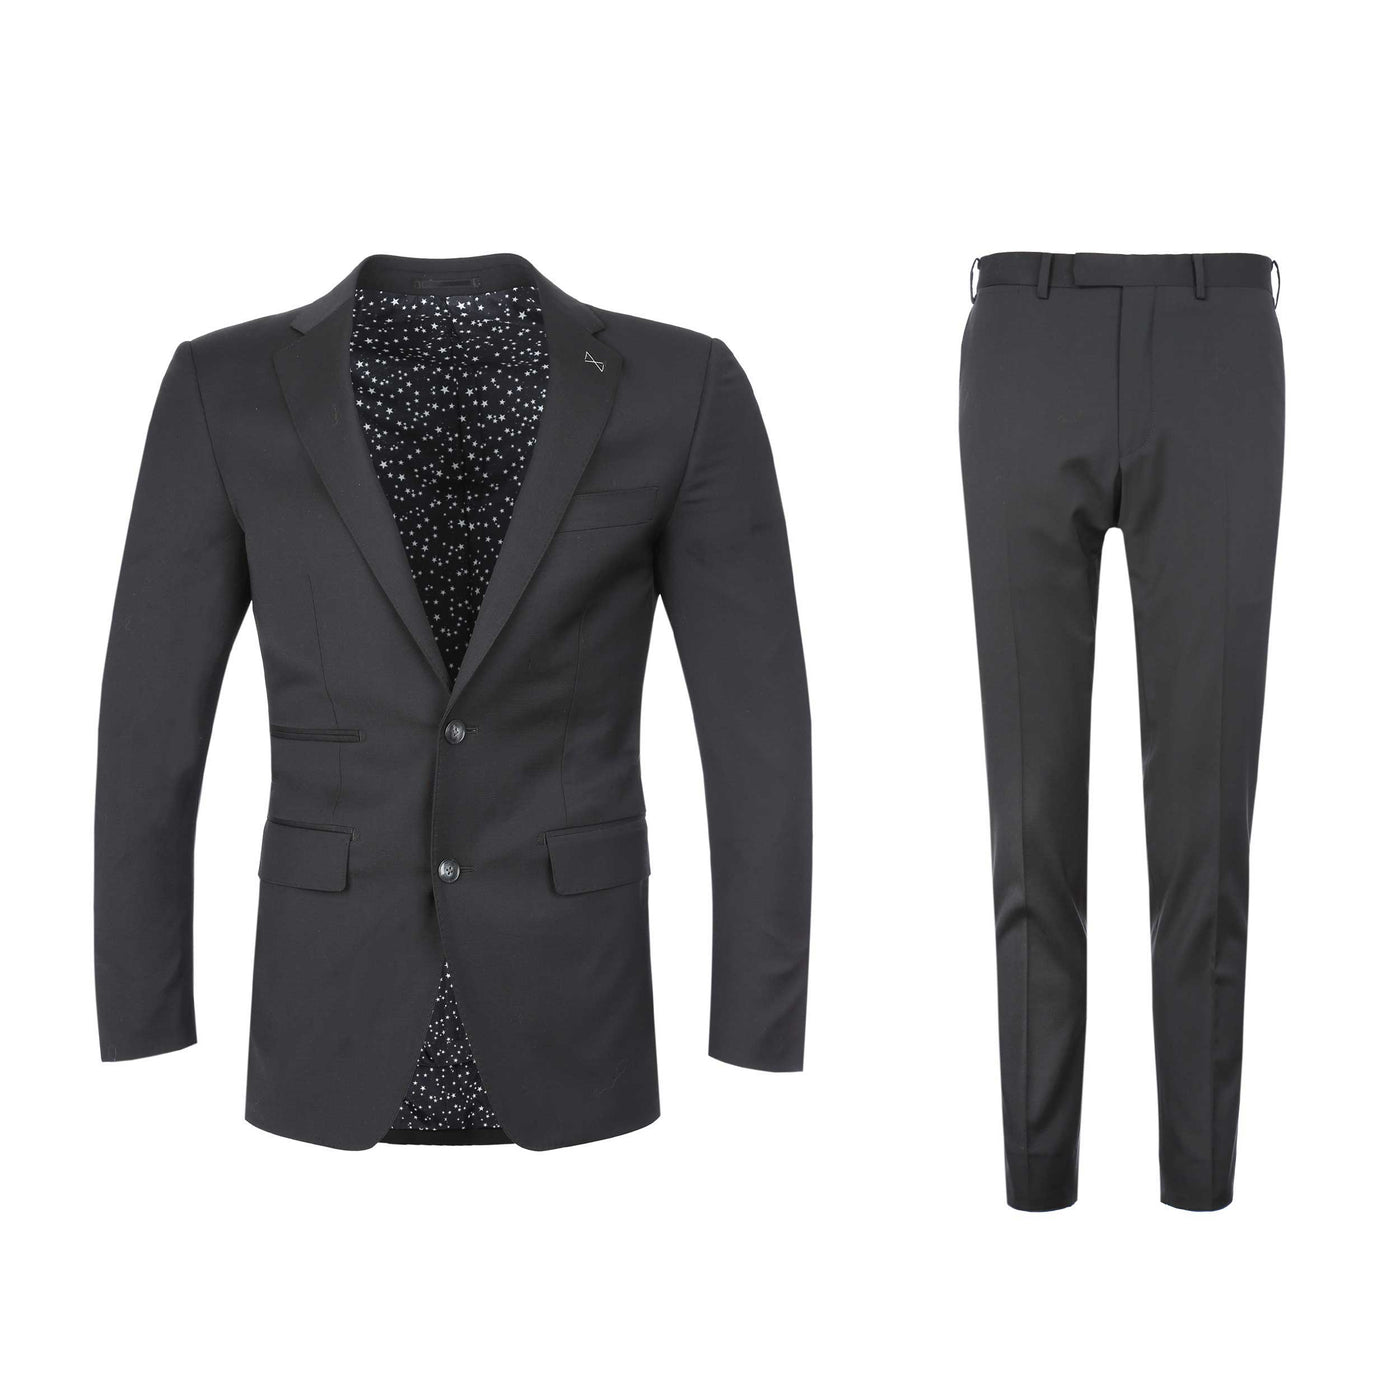 Norton Barrie Bespoke Suit in Black